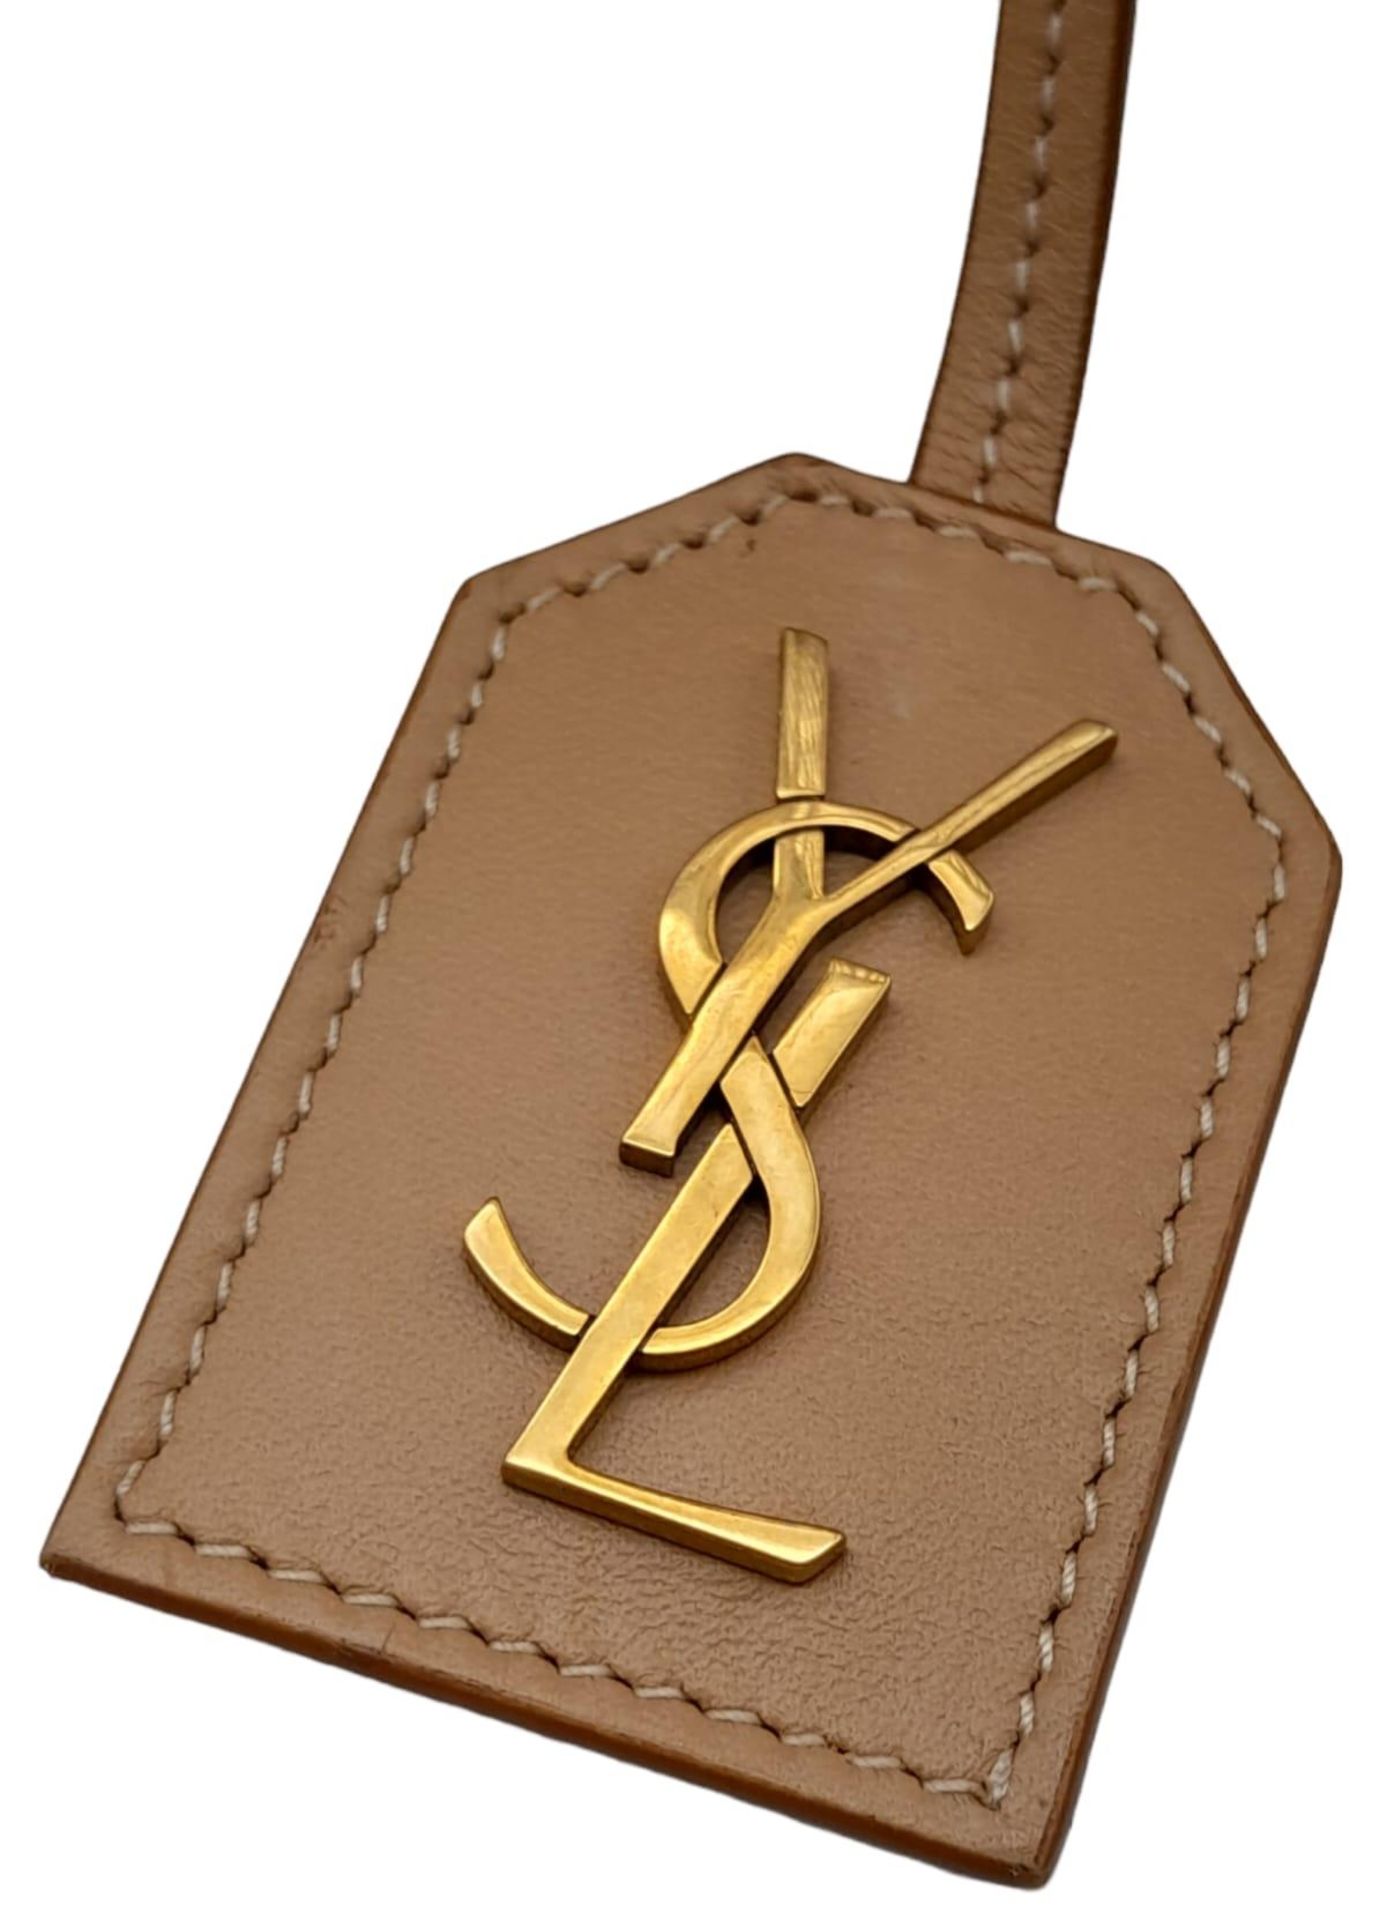 A Saint Laurent Beige Tote Bag. Woven rattan and leather trim exterior. Magnetic closure, gold-toned - Bild 6 aus 12